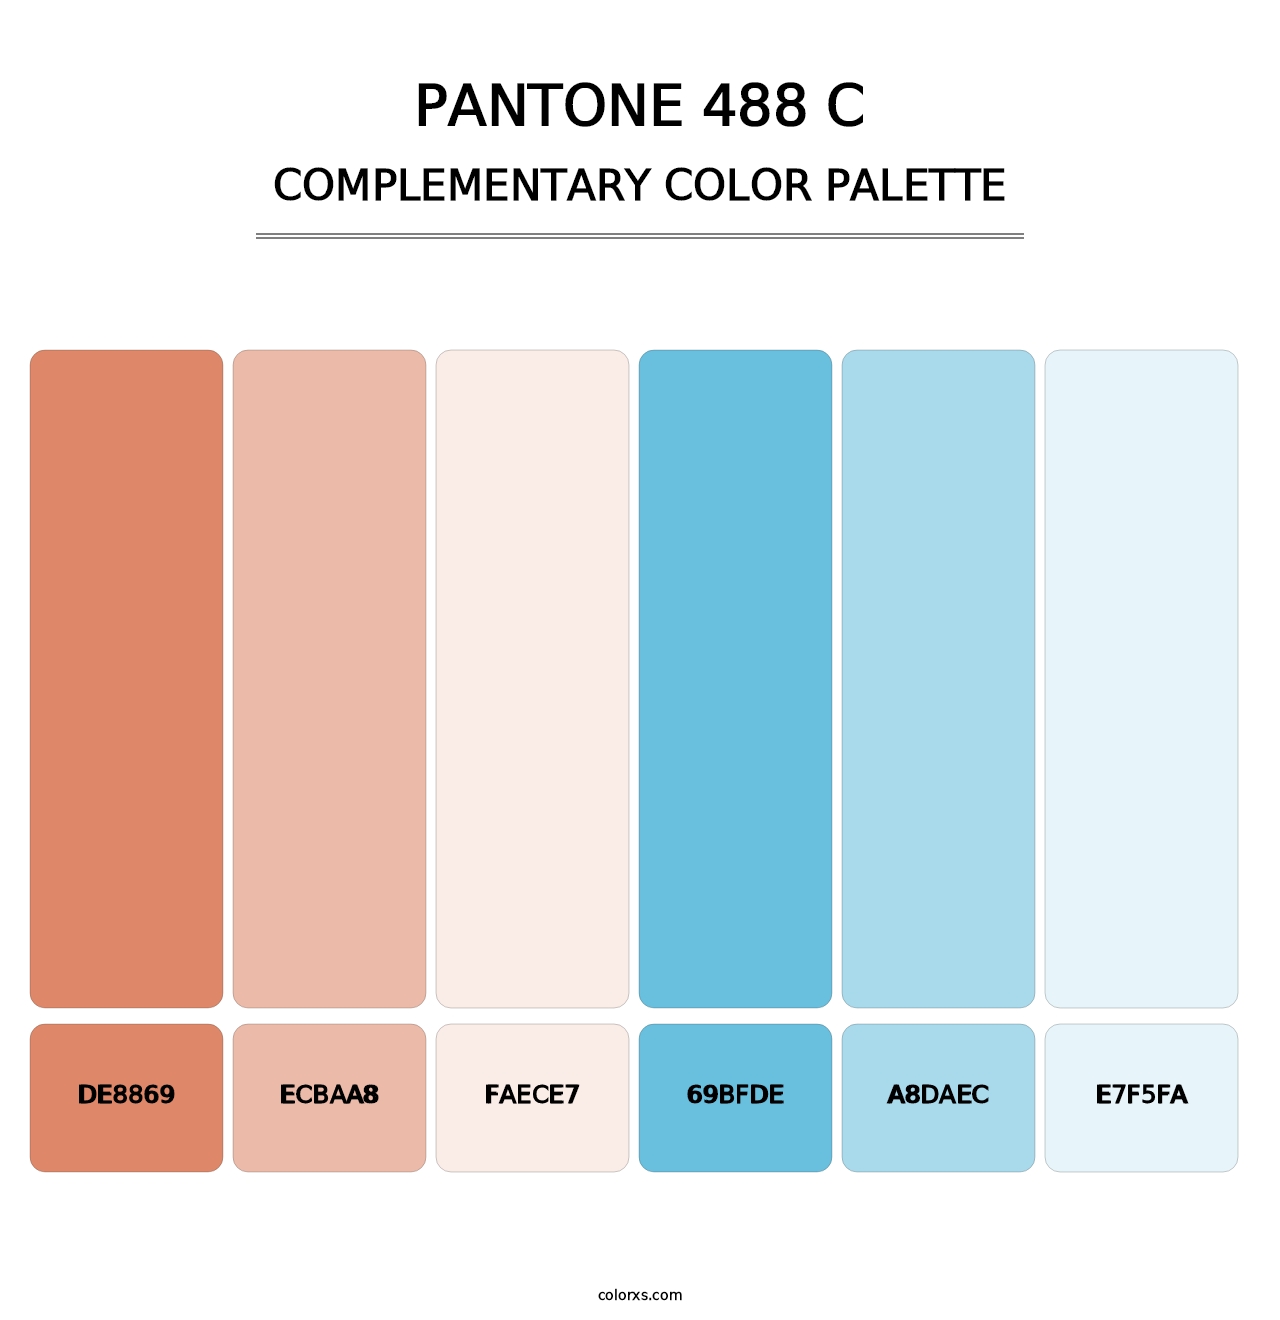 PANTONE 488 C - Complementary Color Palette